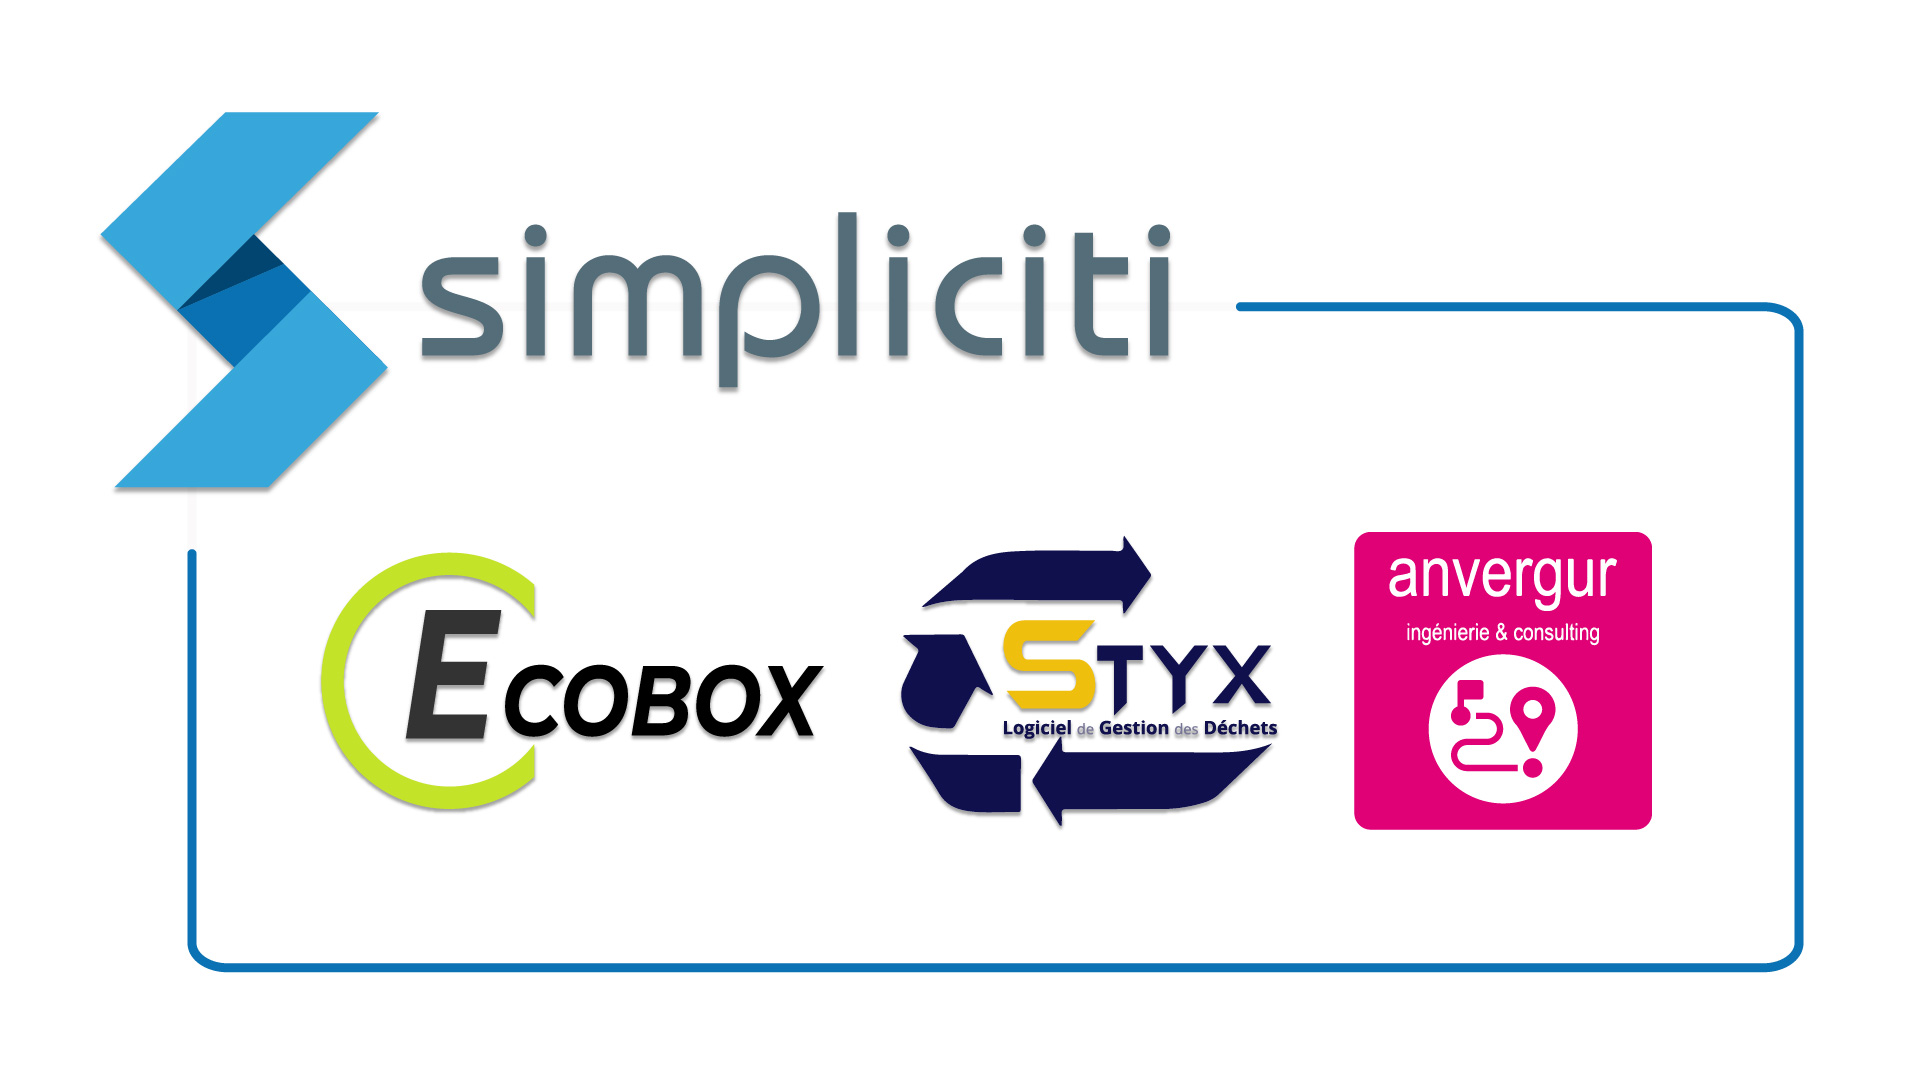 2021-2022 - Ecobox, Styx et Anvergur join Simpliciti